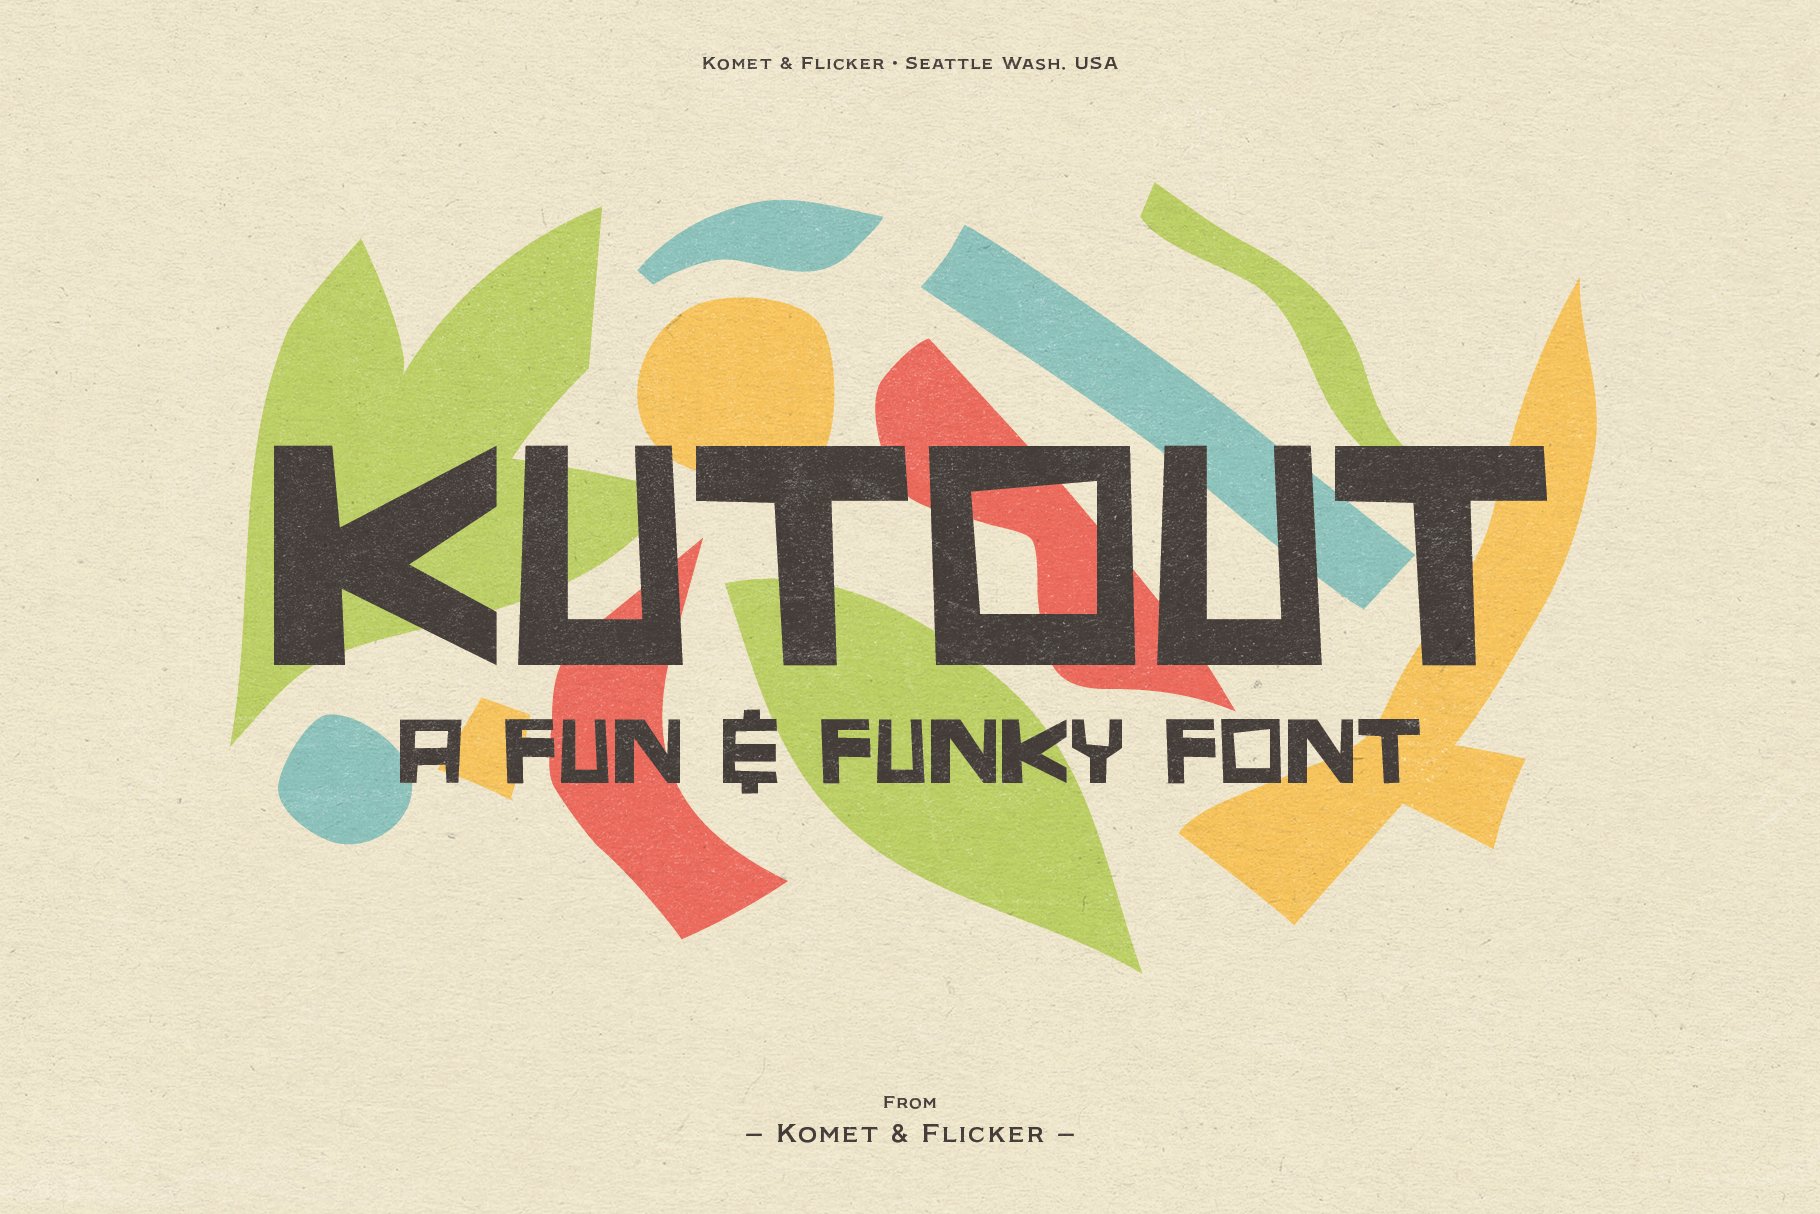 KutOut - A Fun Display Font cover image.